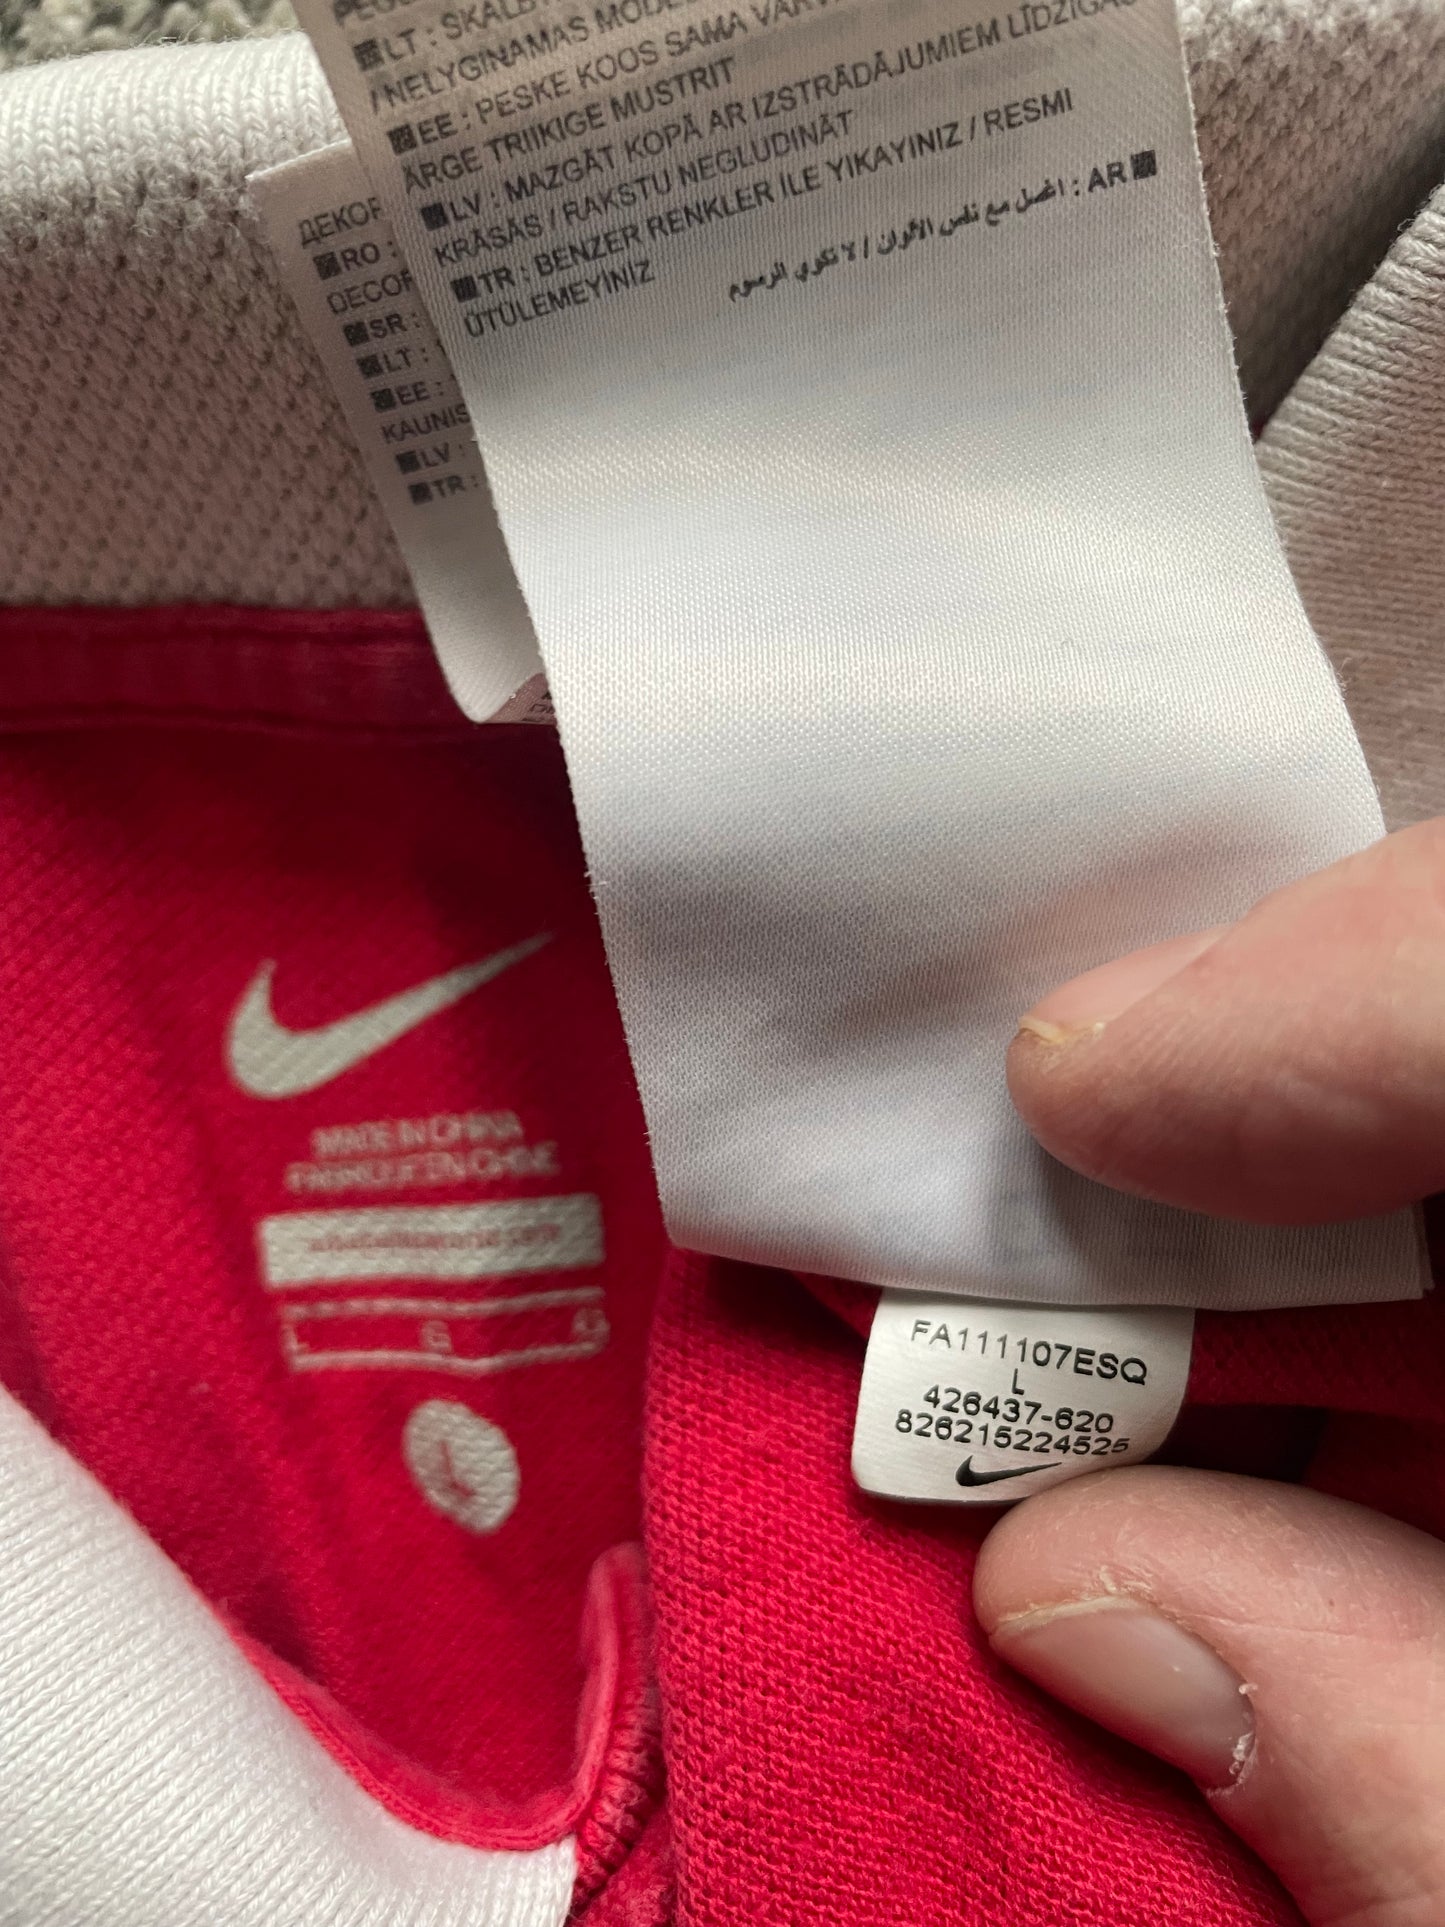 Arsenal Nike 2011 Polo Shirt (very good) Adults Large